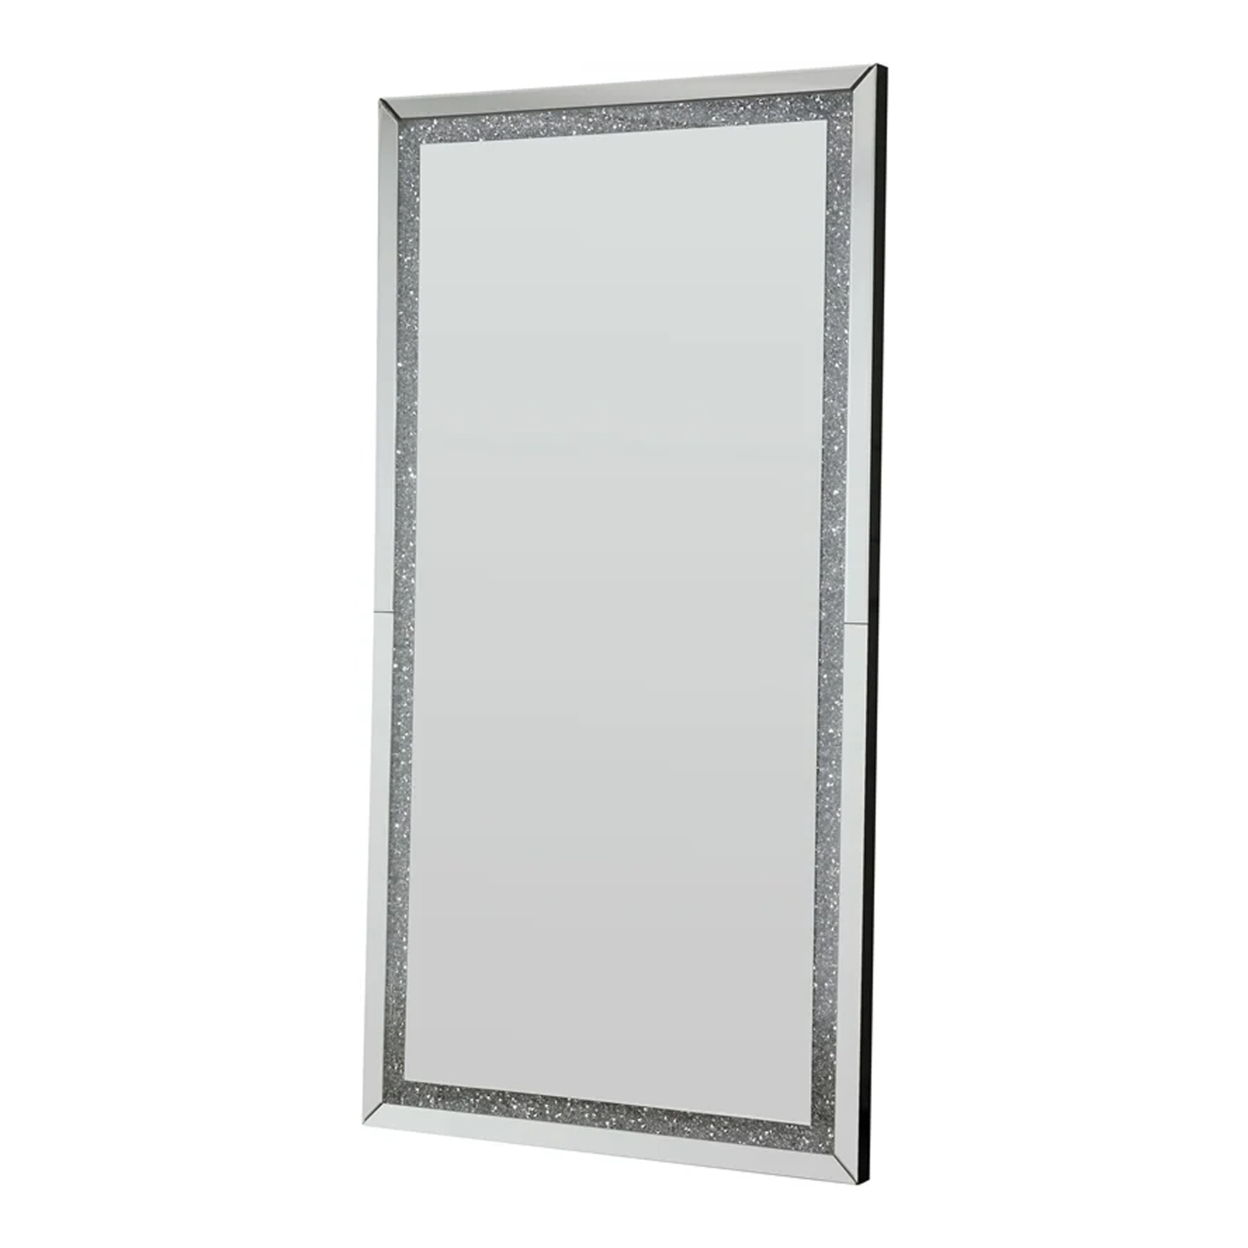 Floor Mirror With Faux Diamond Inlays And LED Trim, Silver- Saltoro Sherpi